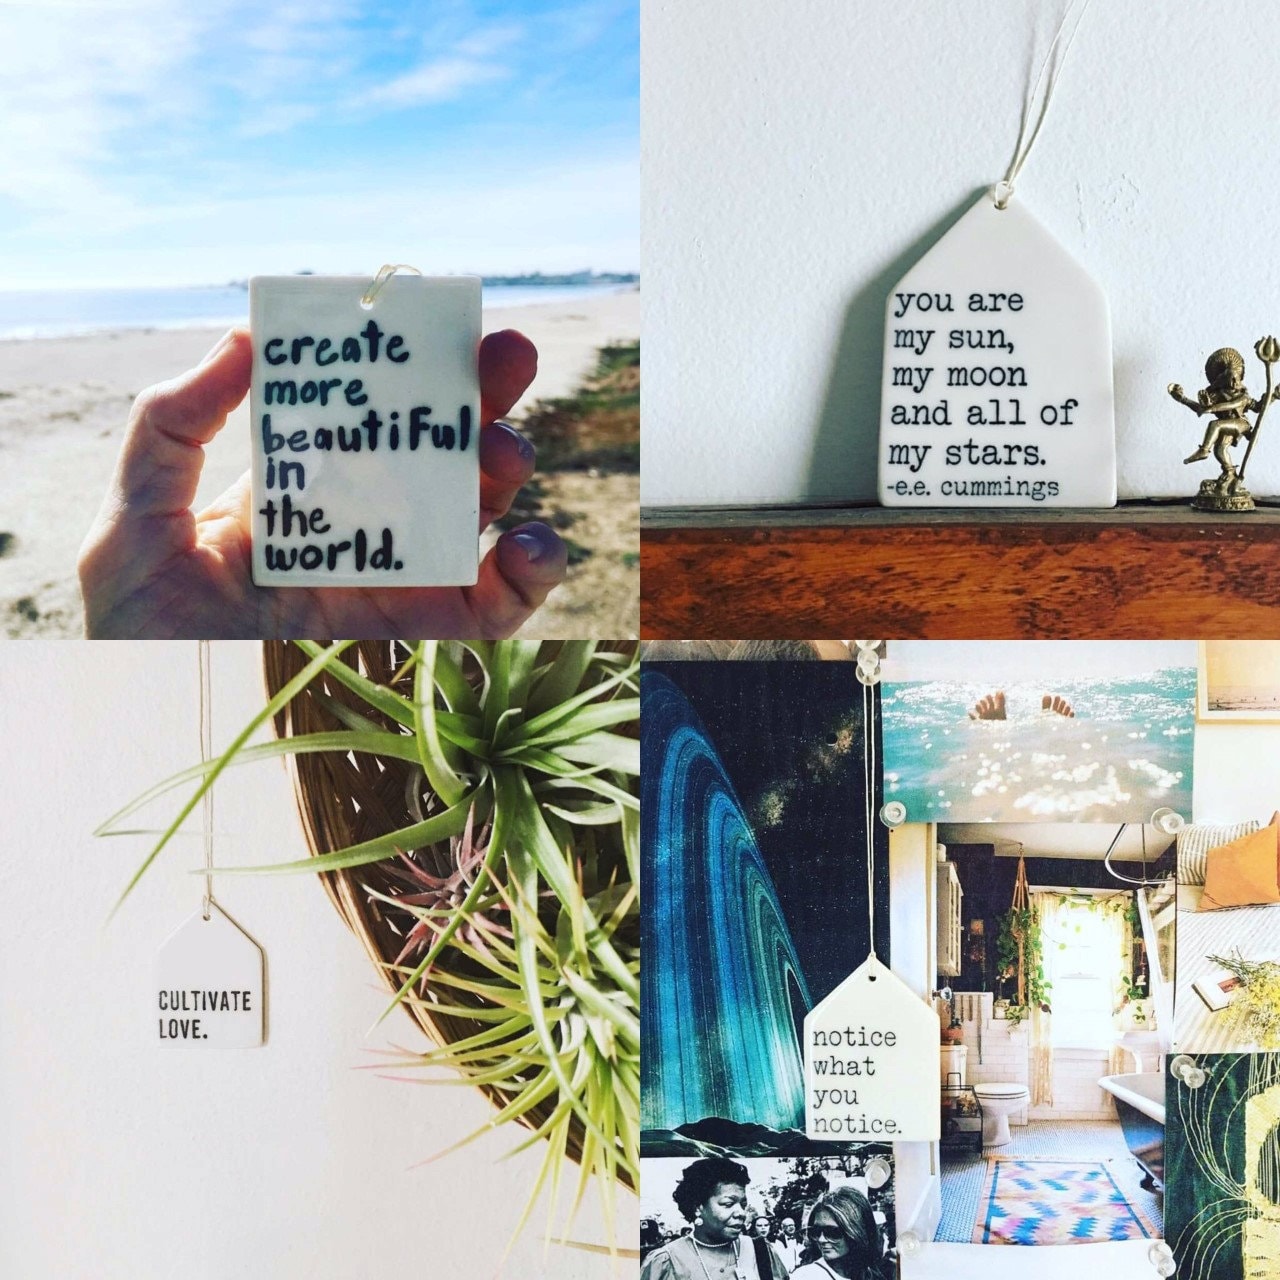 anne frank quote | ceramic wall tag | ceramic wall tile | screenprinted ceramics | encouragement | happiness | gratitude | joy